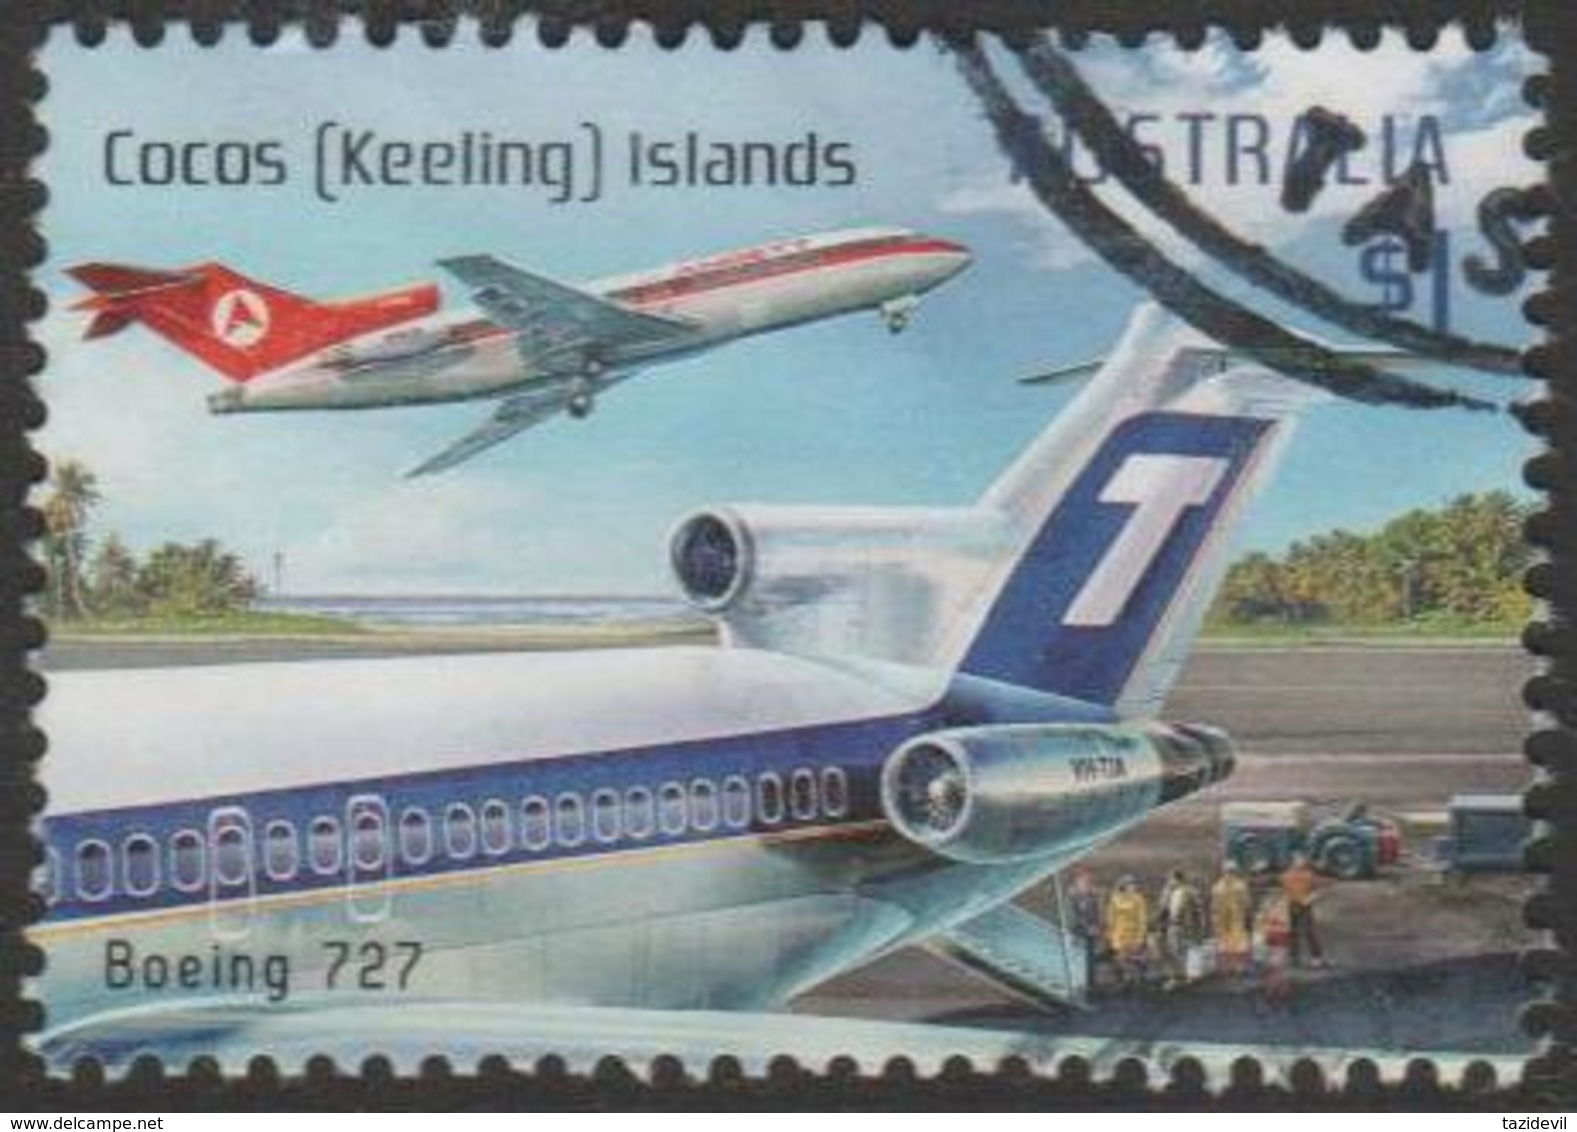 COCOS (KEELING) ISLANDS - USED 2017 $1.00 Aviation - Boeing 727 - Aircraft - Kokosinseln (Keeling Islands)